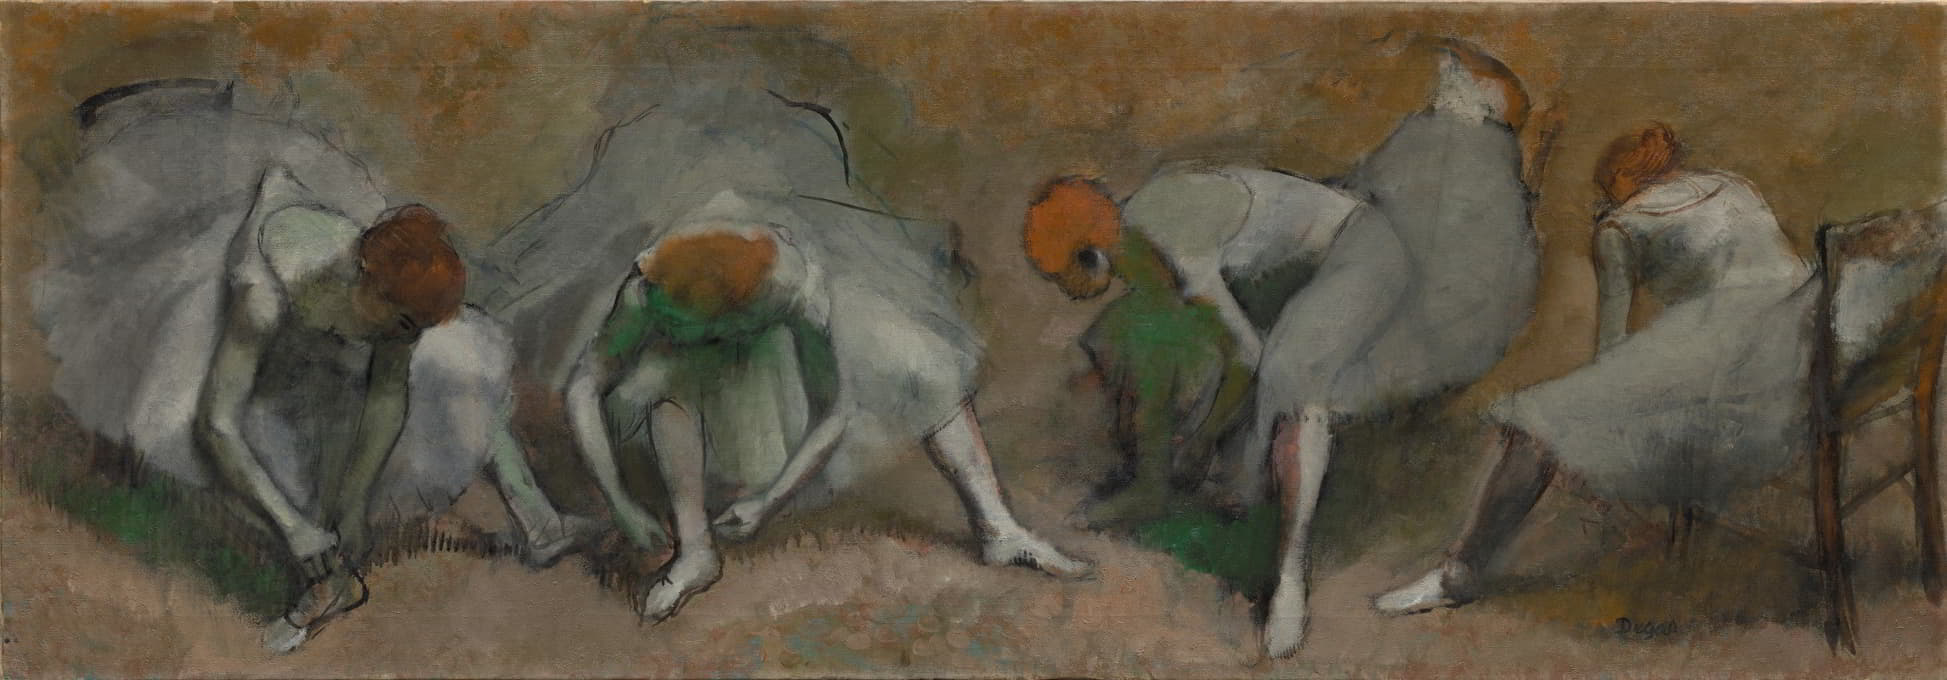 Edgar Degas - Frieze of Dancers